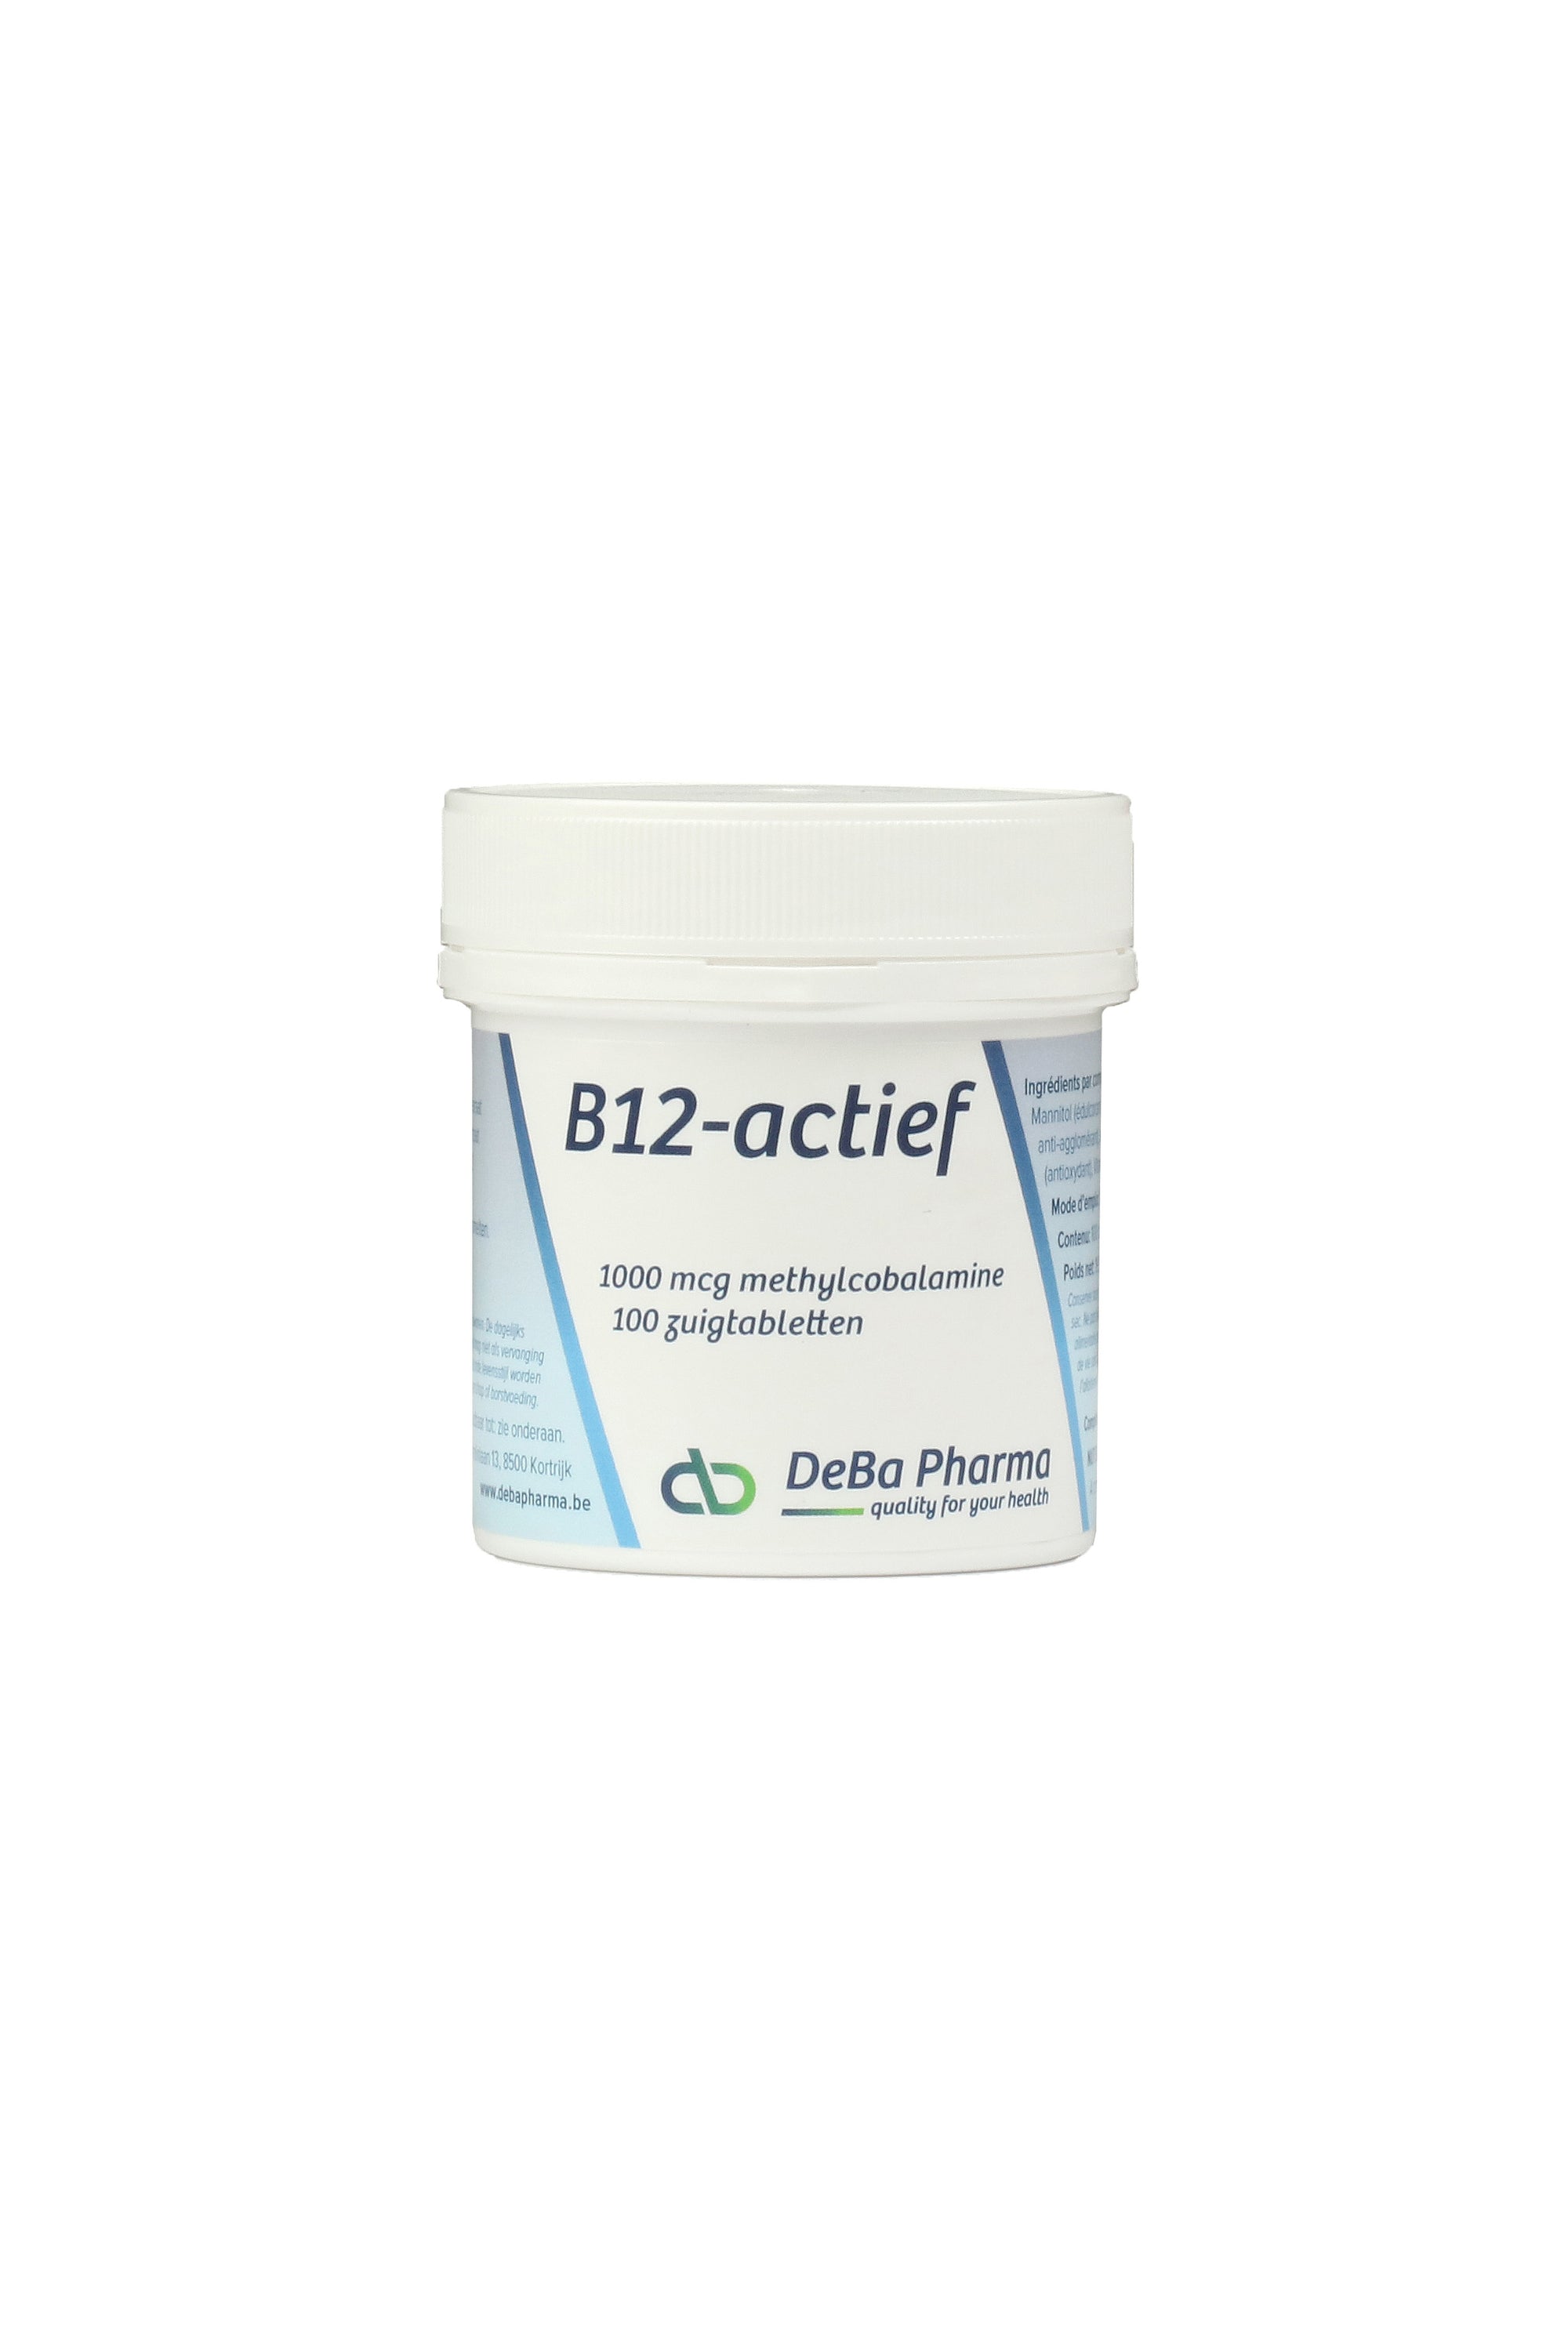 DeBa Pharma - B12-actief